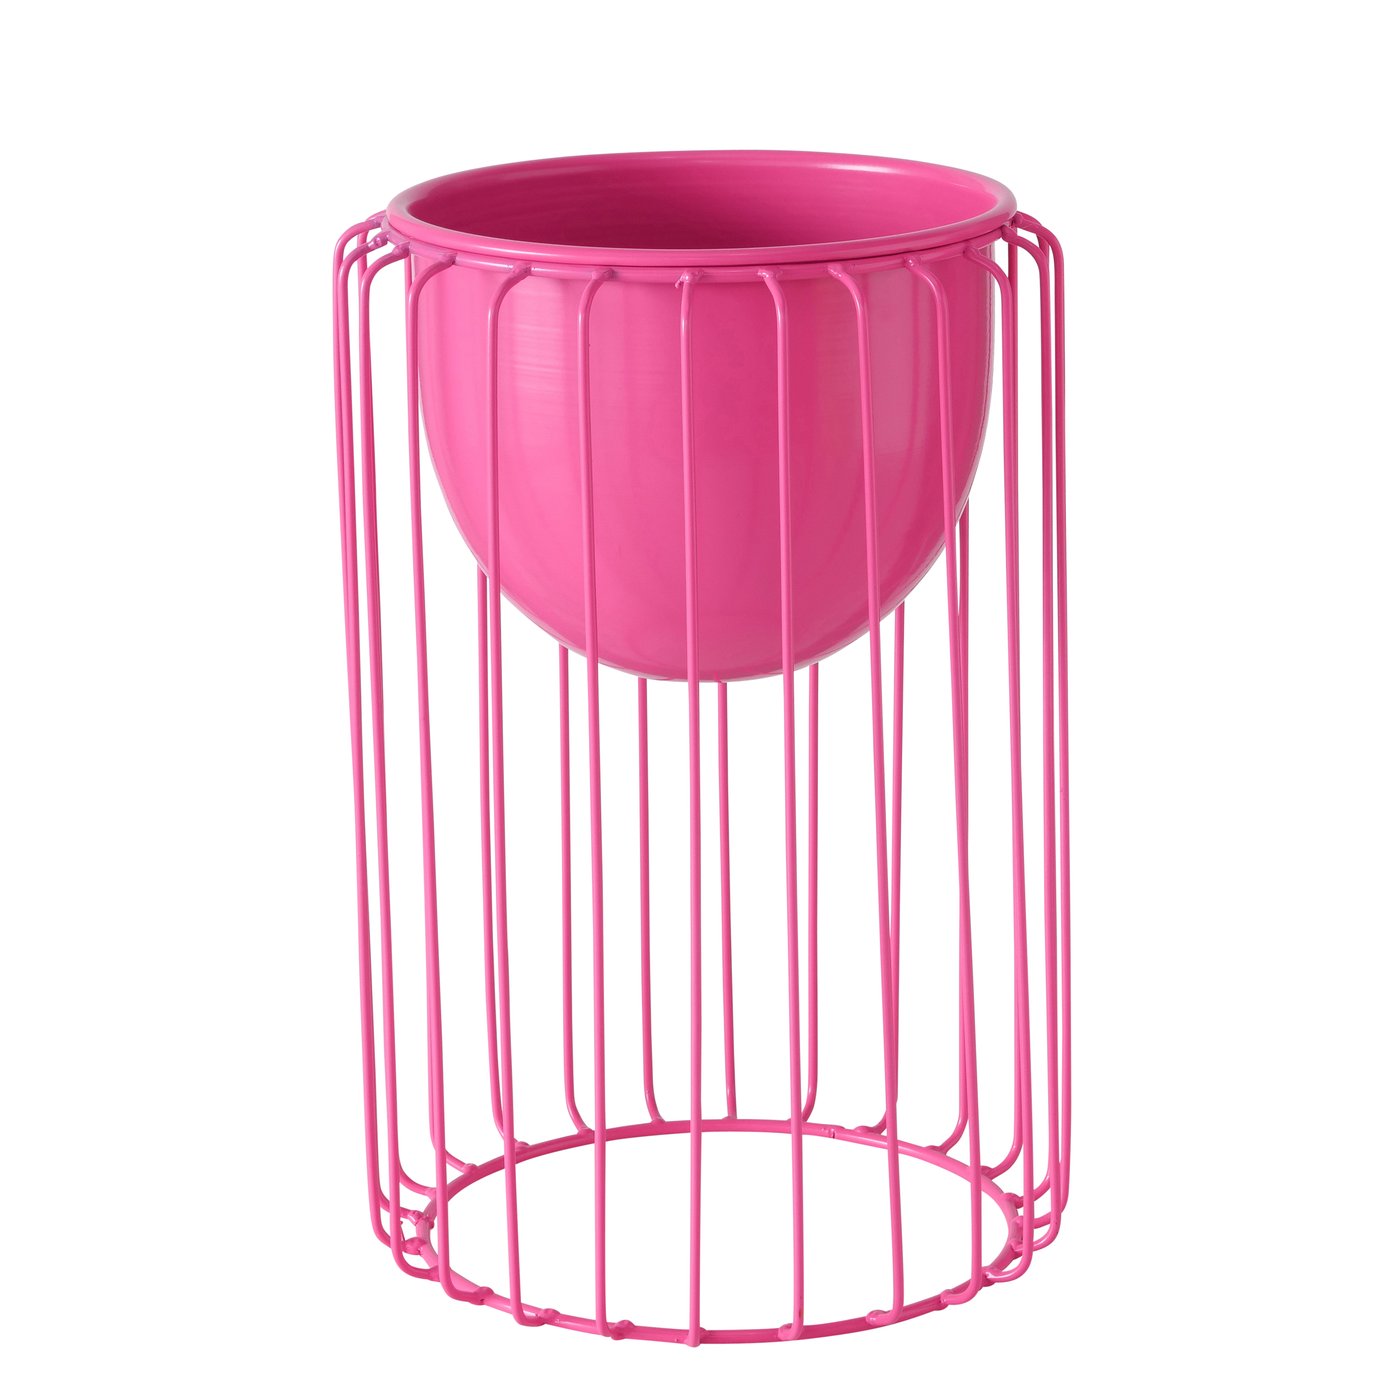 &Quirky Colour Pop Vaso Pink Metal Planter